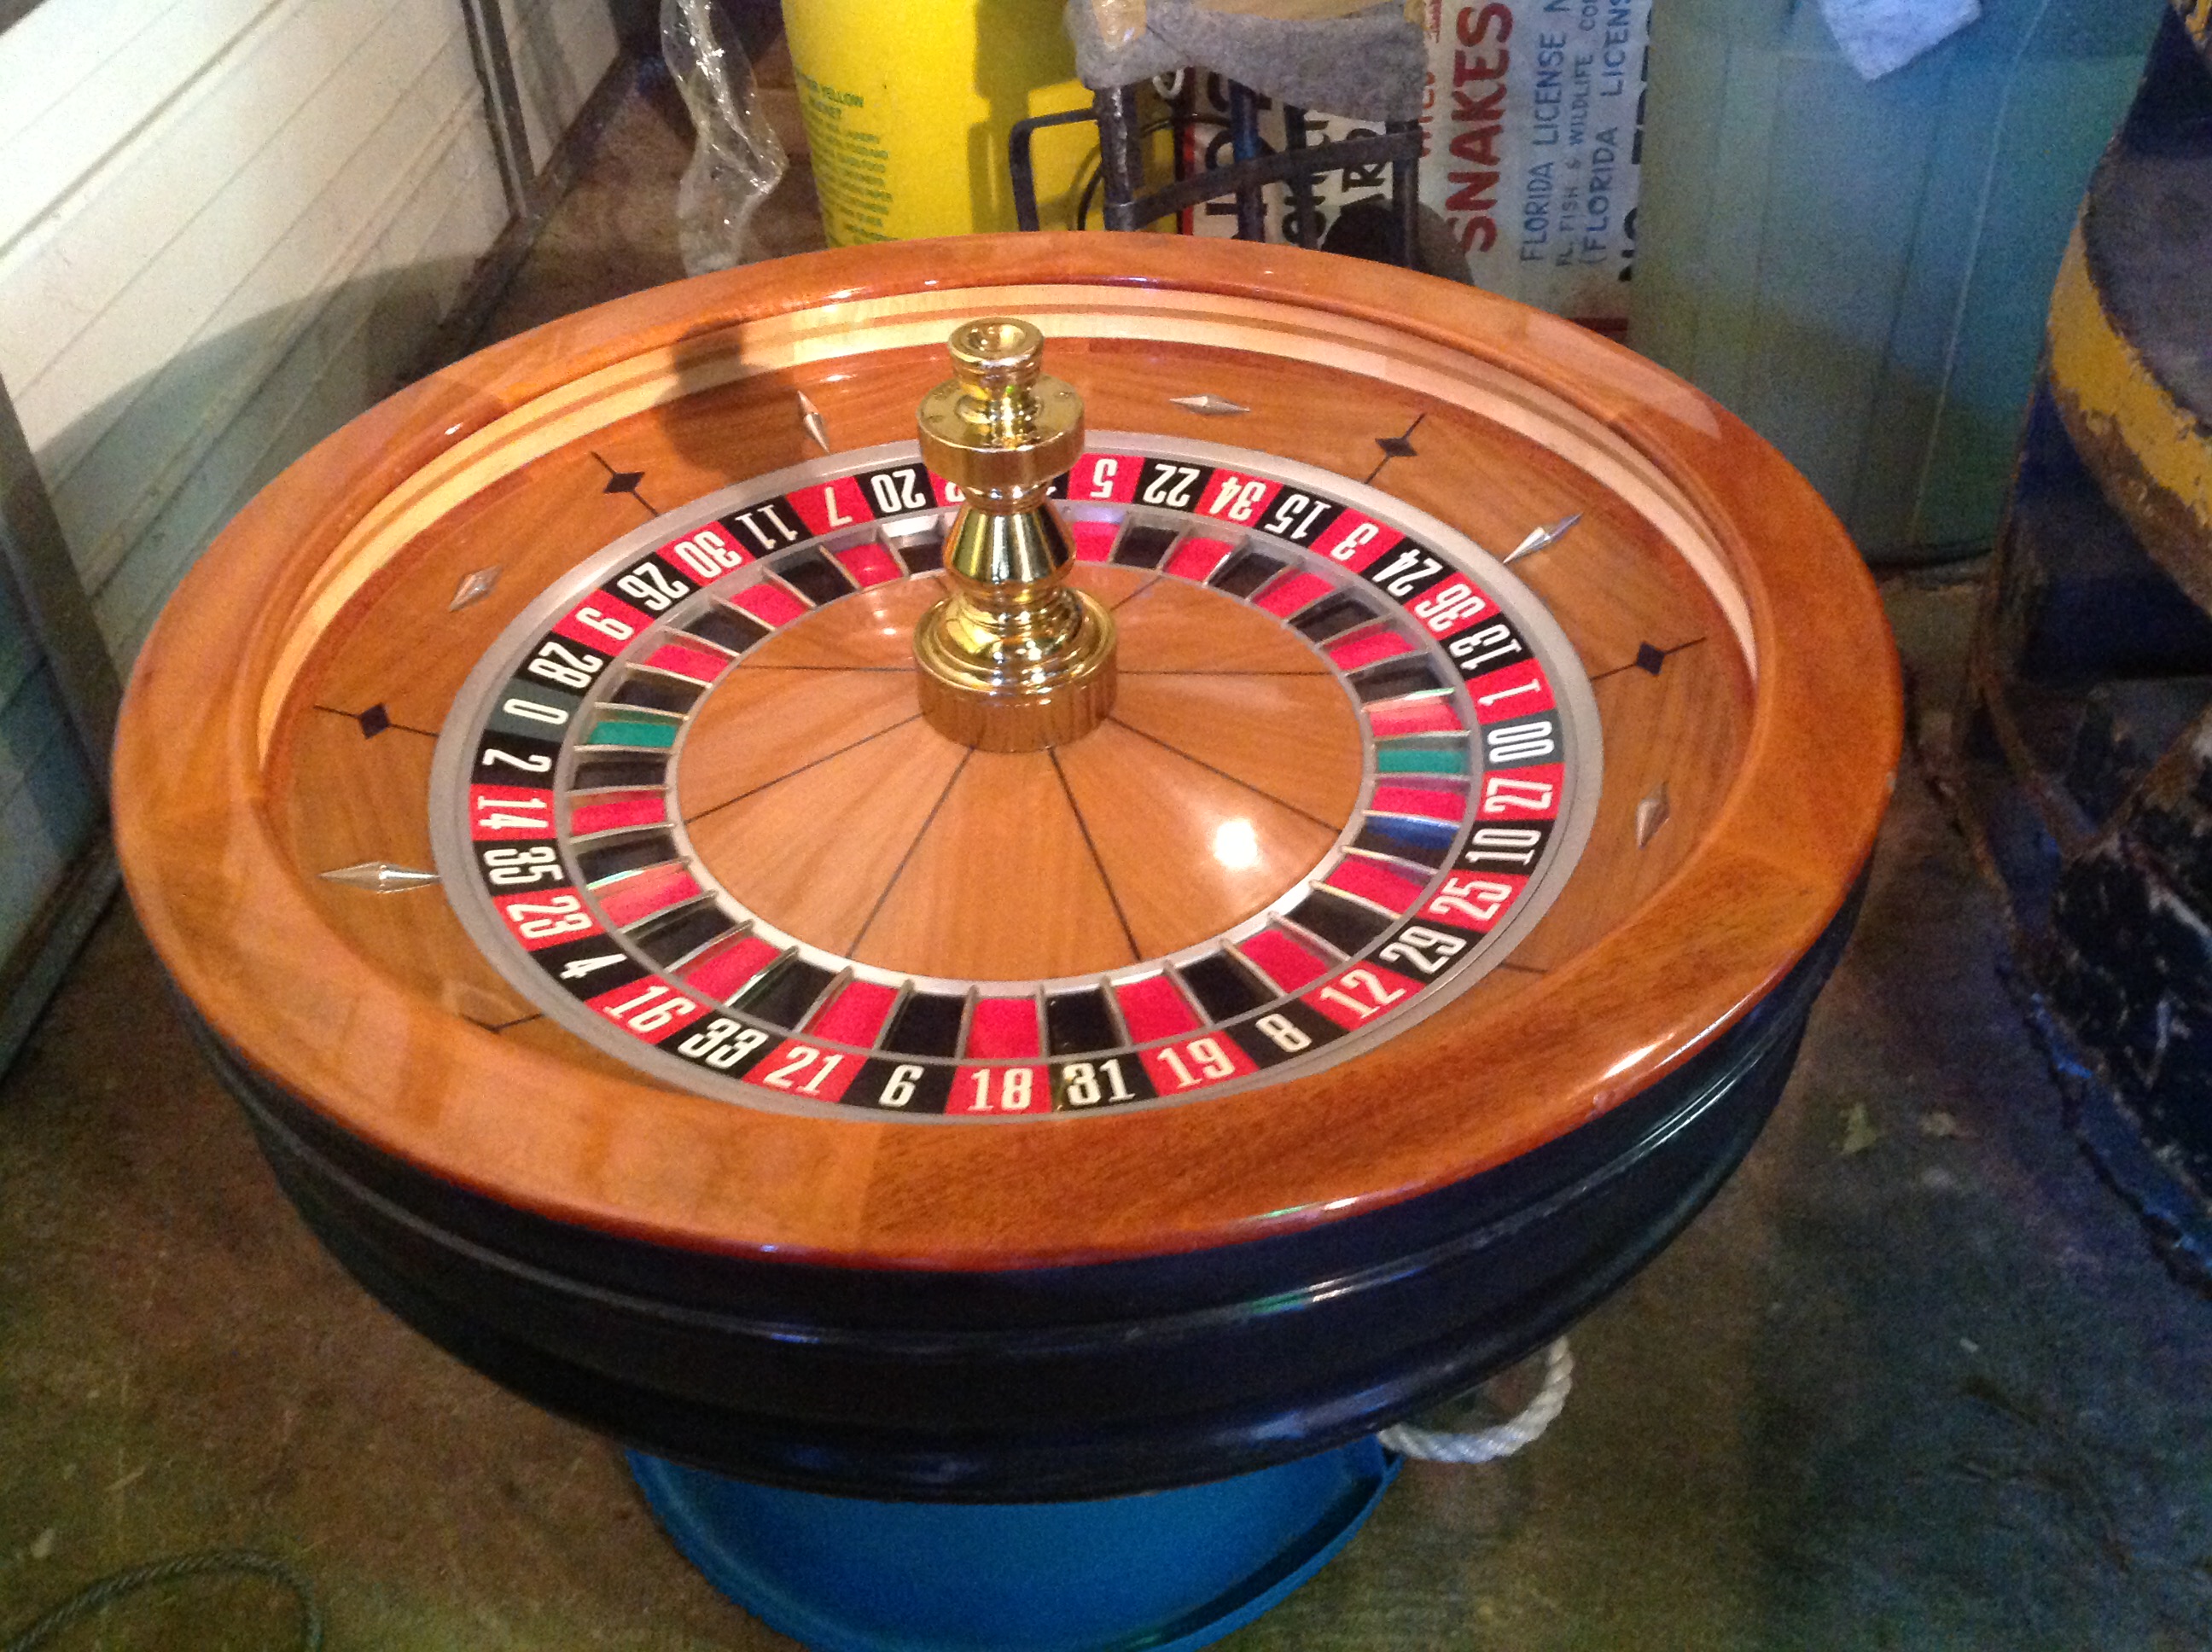 0 on roulette wheel colors